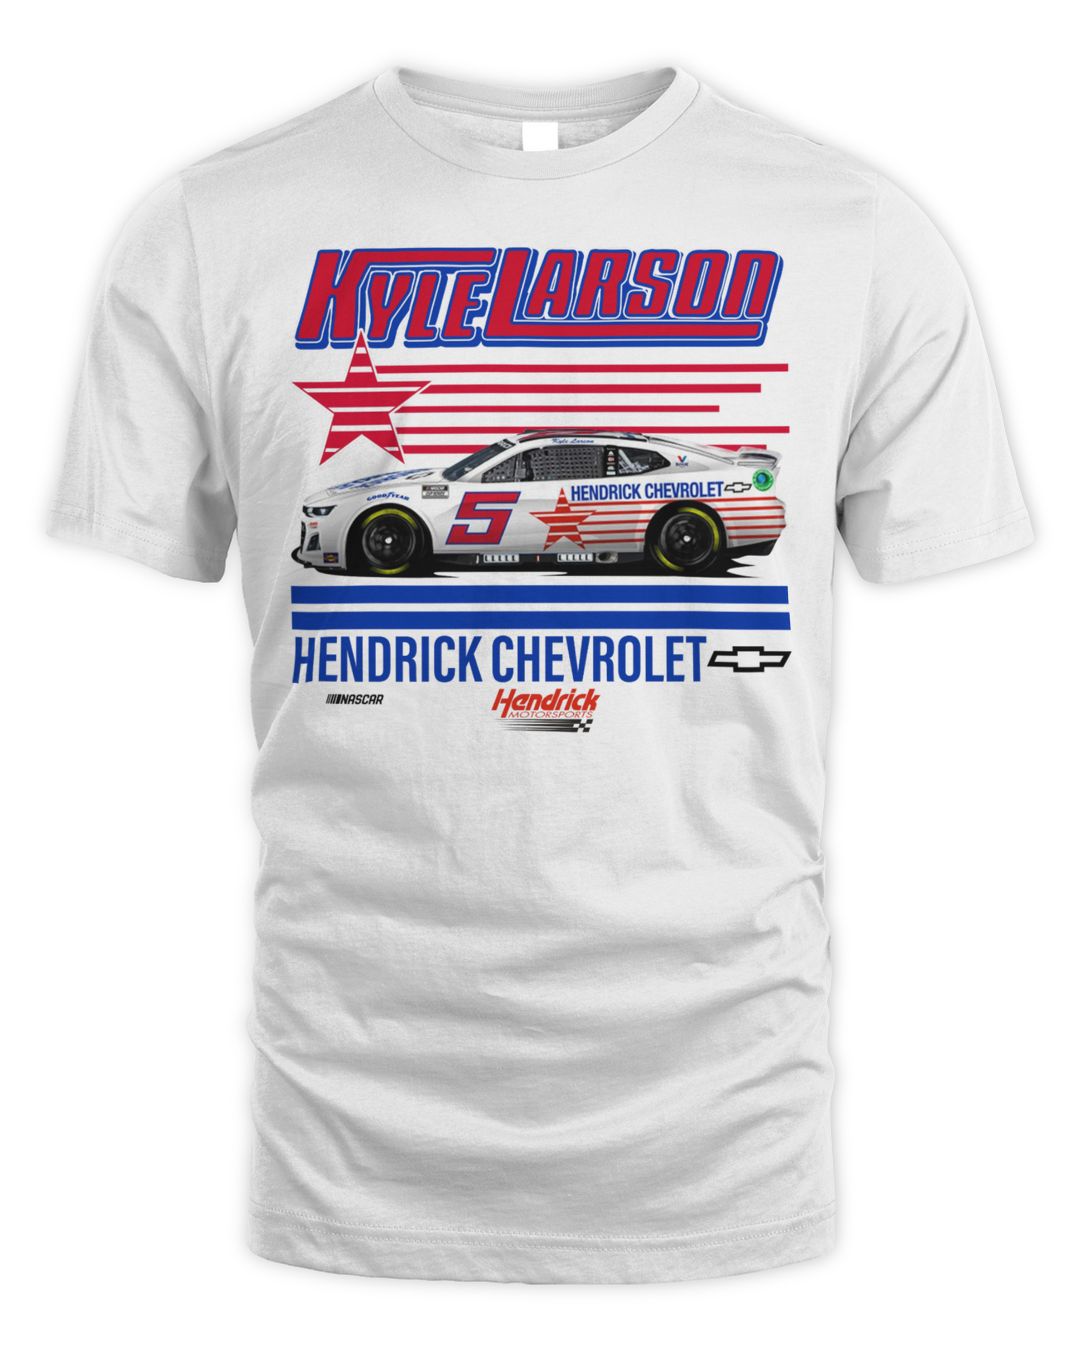 Kyle Larson Hendrick Motorsports Team Collection Hendrickcars Throwback Shirt